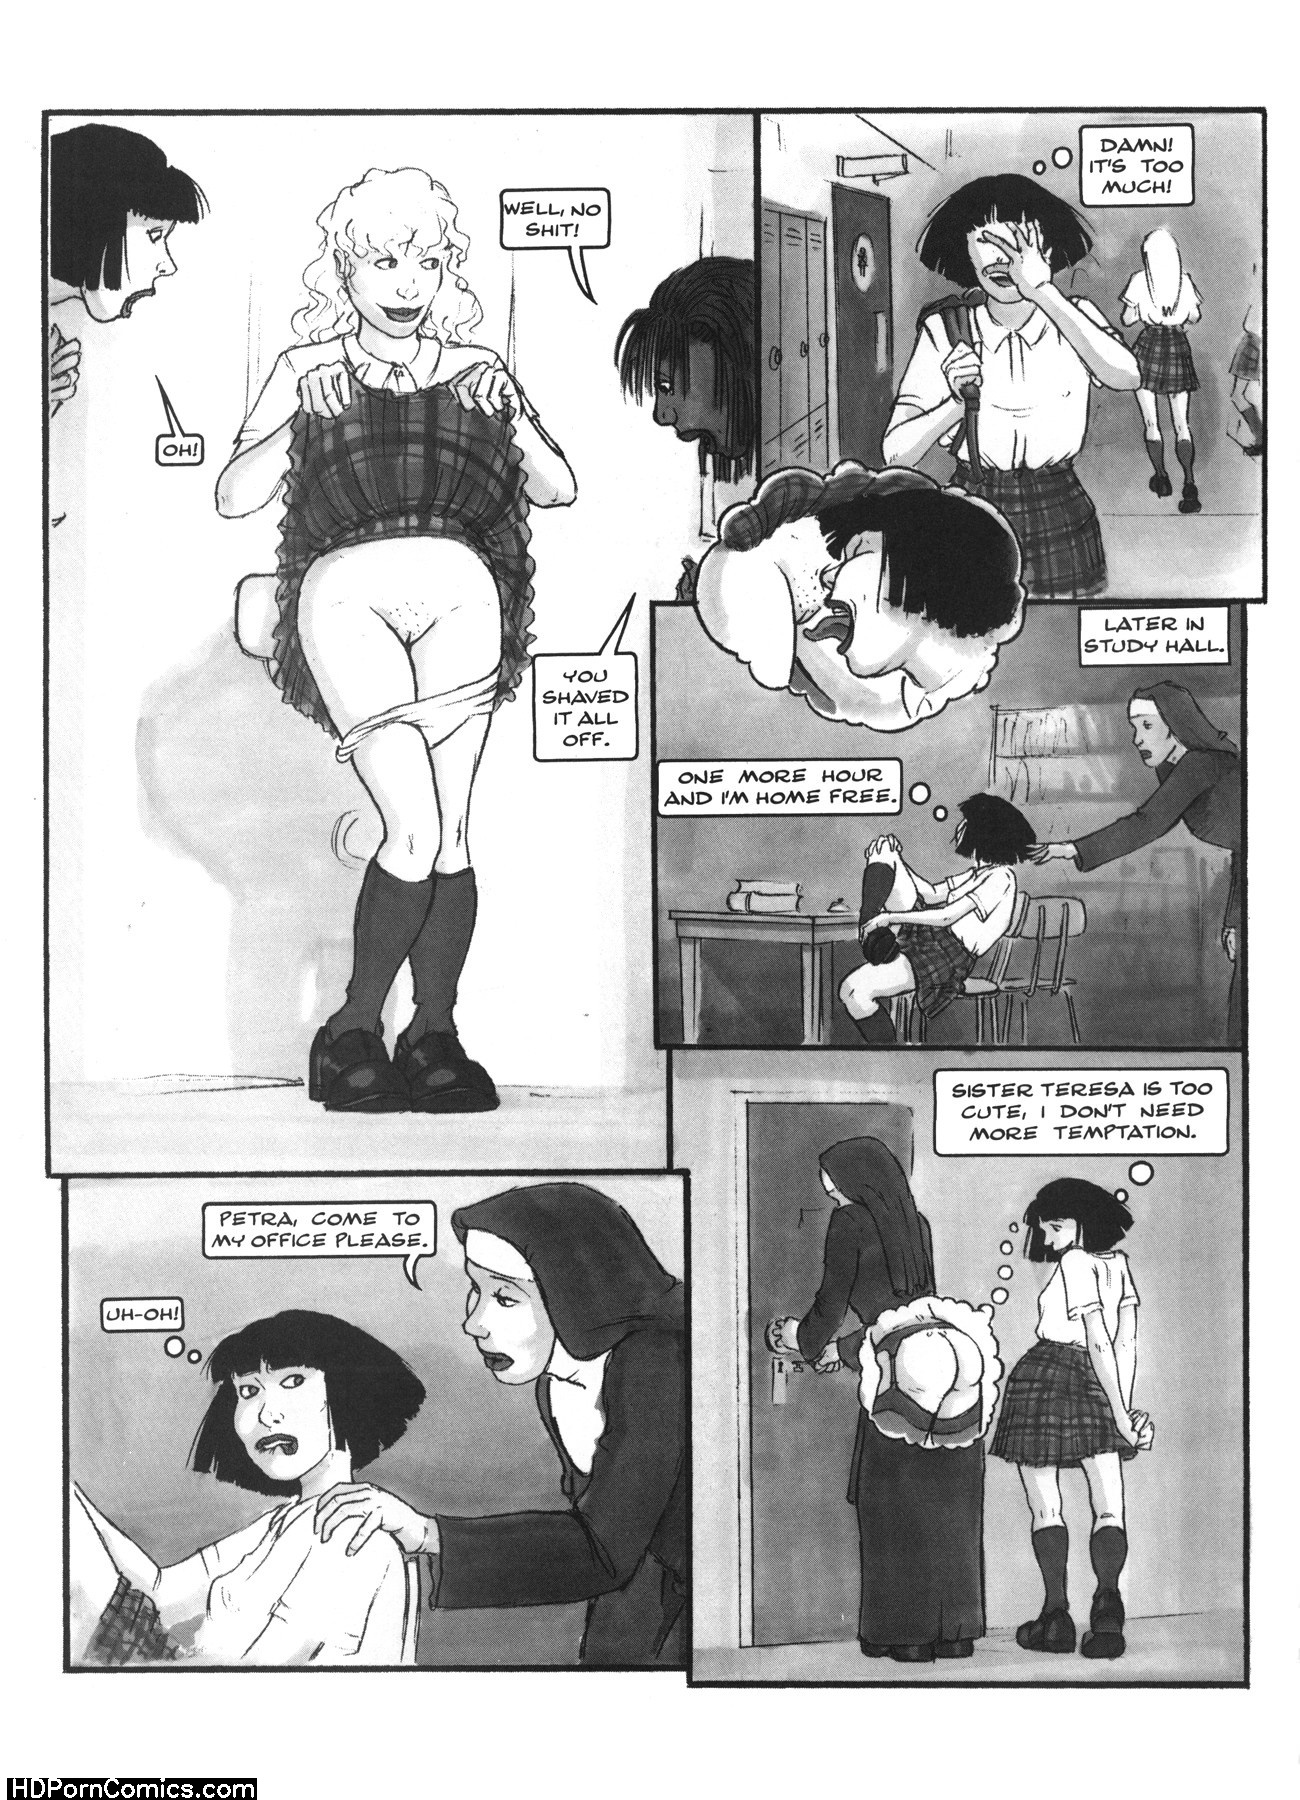 Anime Lesbian Cartoon Porn Comics - Gallery - Cartoon Porn Comics